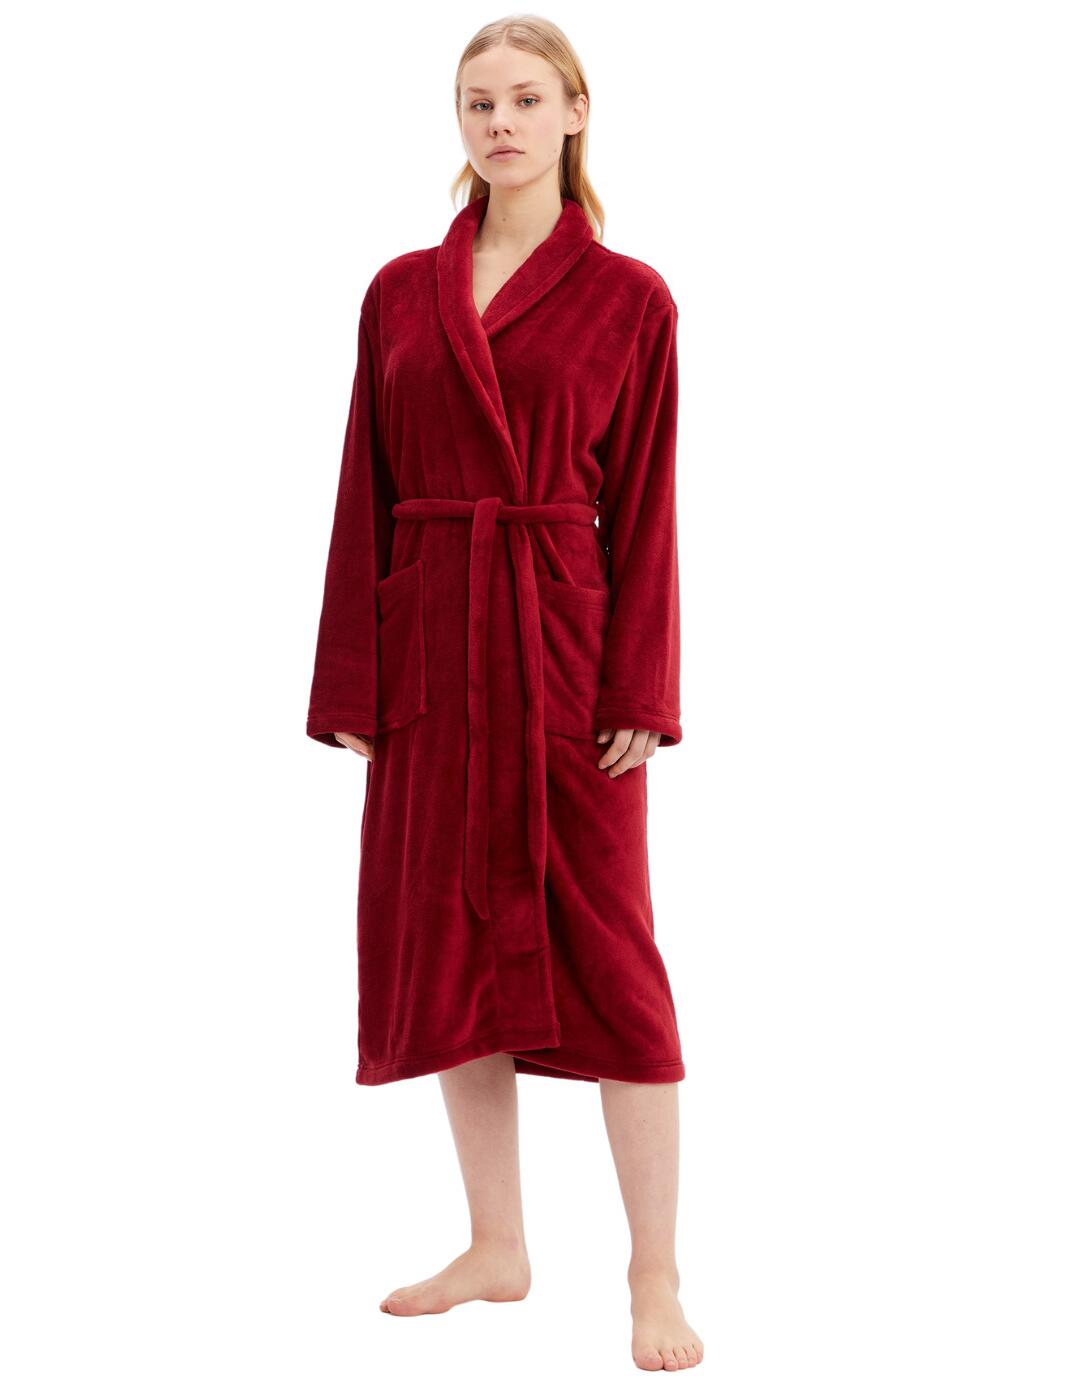 Calvin Klein Robe Red Carpet